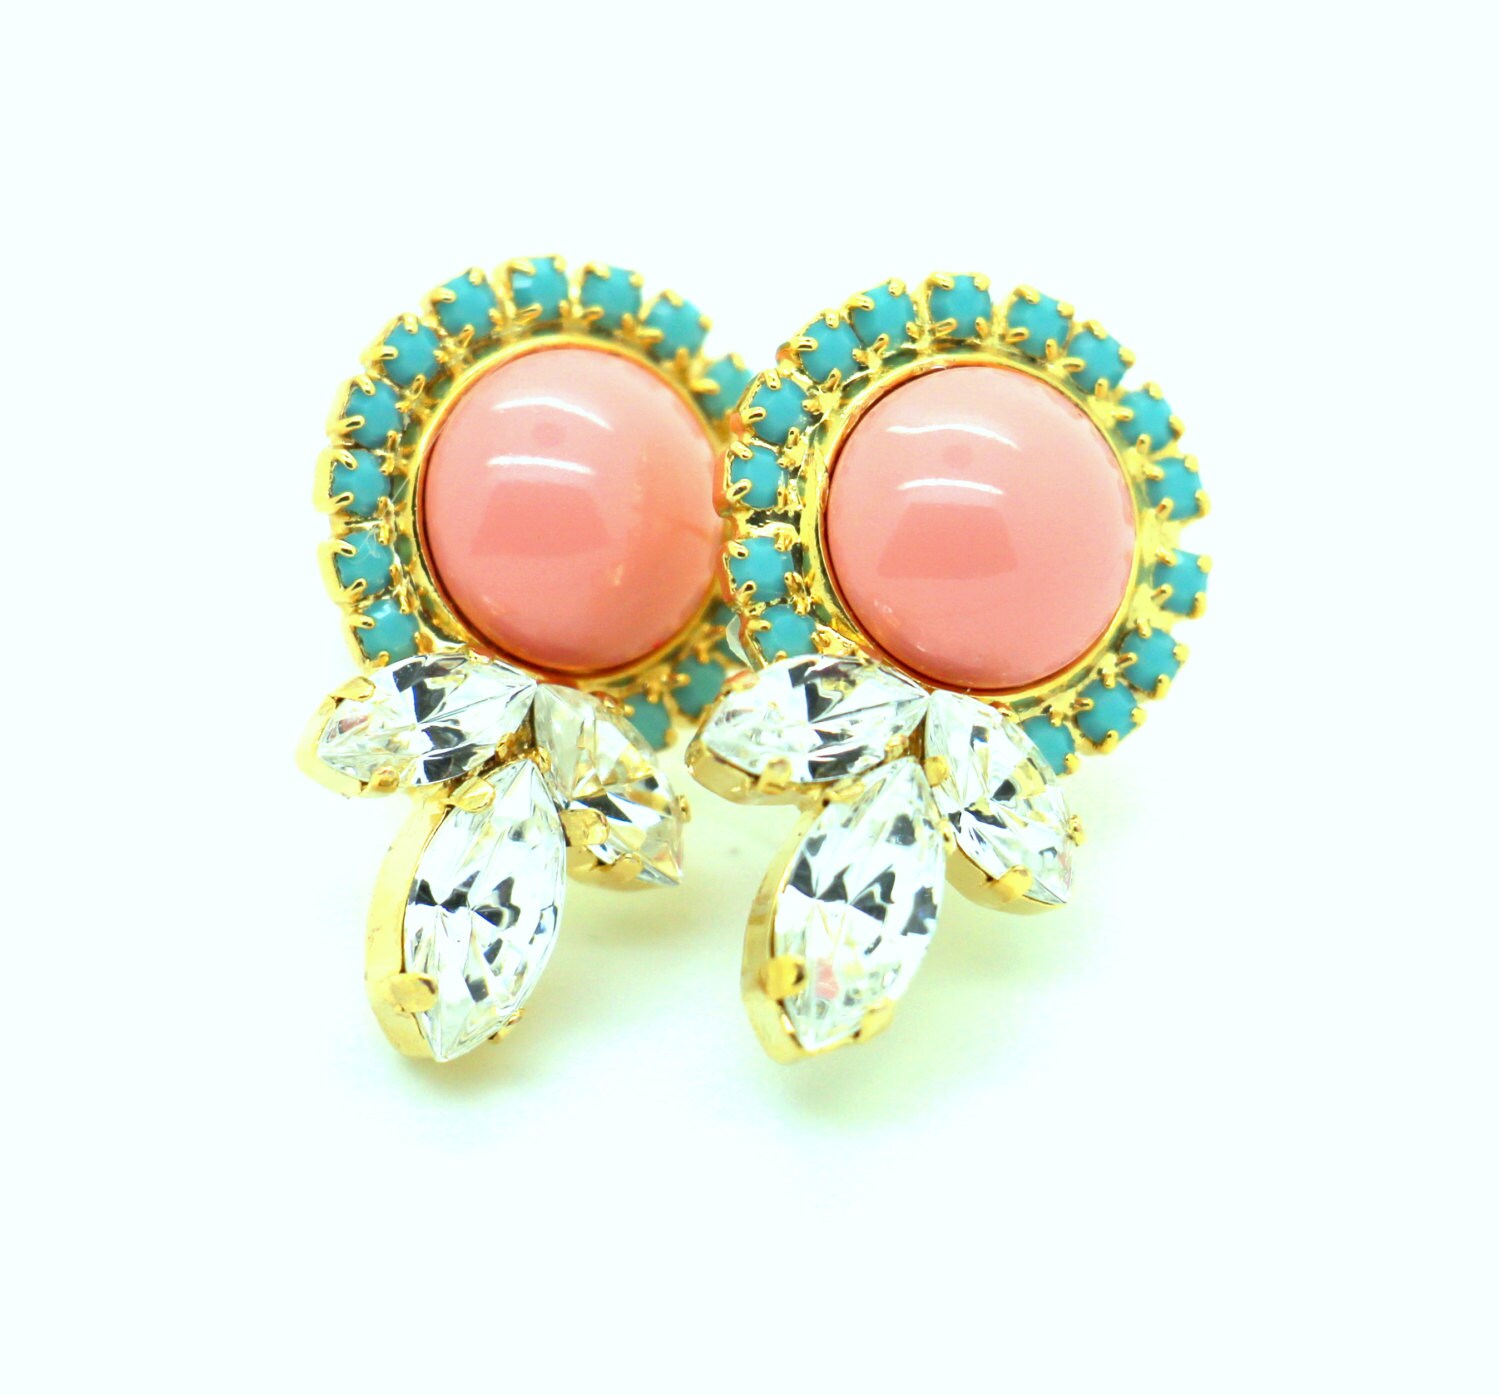 Pink Earrings Pin Stud Earrings Pink Turquoise Earrings | Etsy